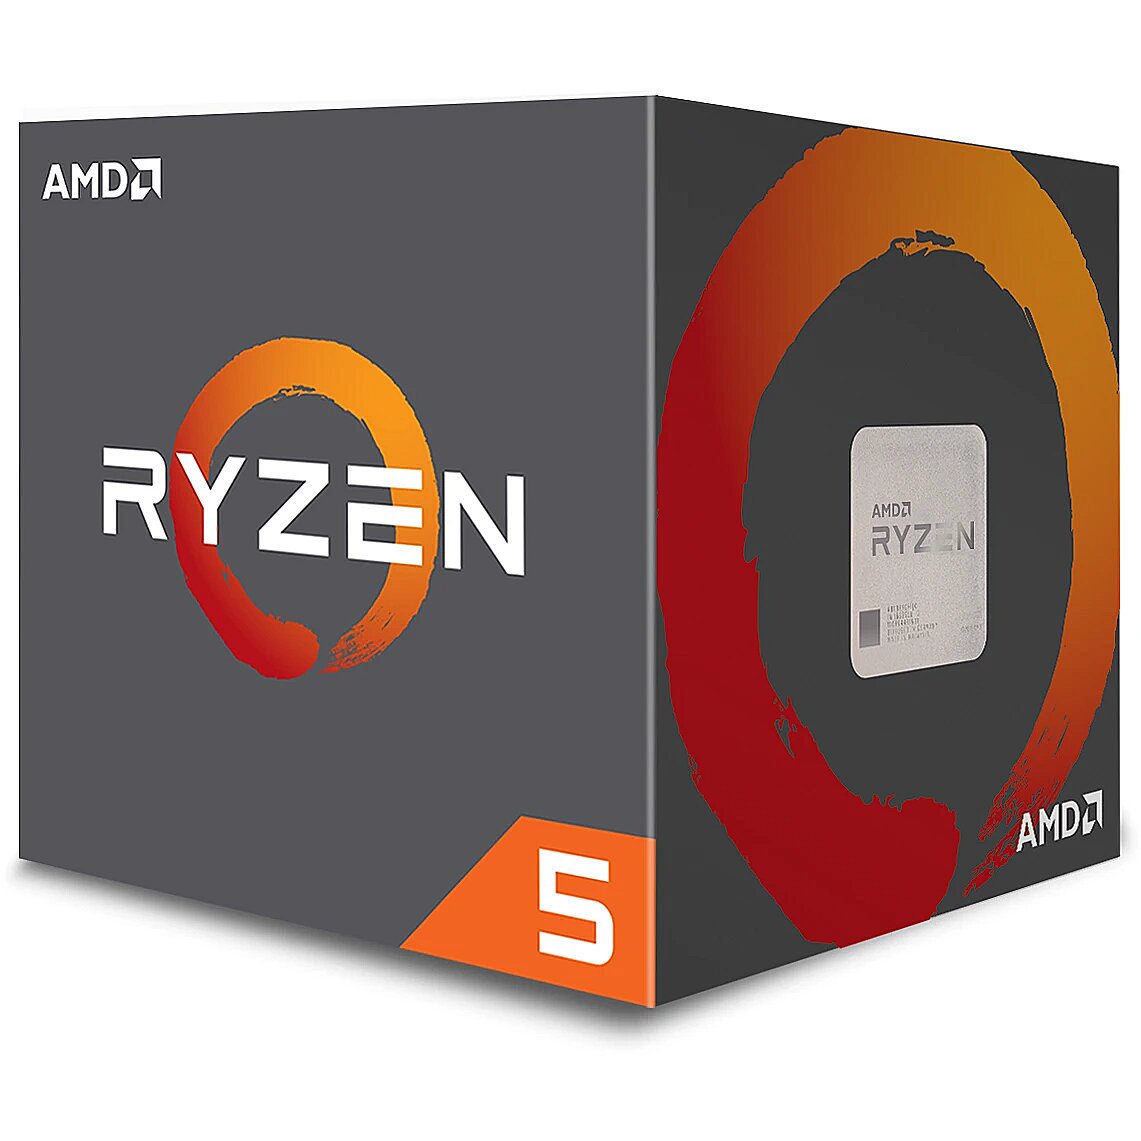 AMD Ryzen 5 1600 (6C/12T, 3.2GHz, 16MB Cache, 65W)